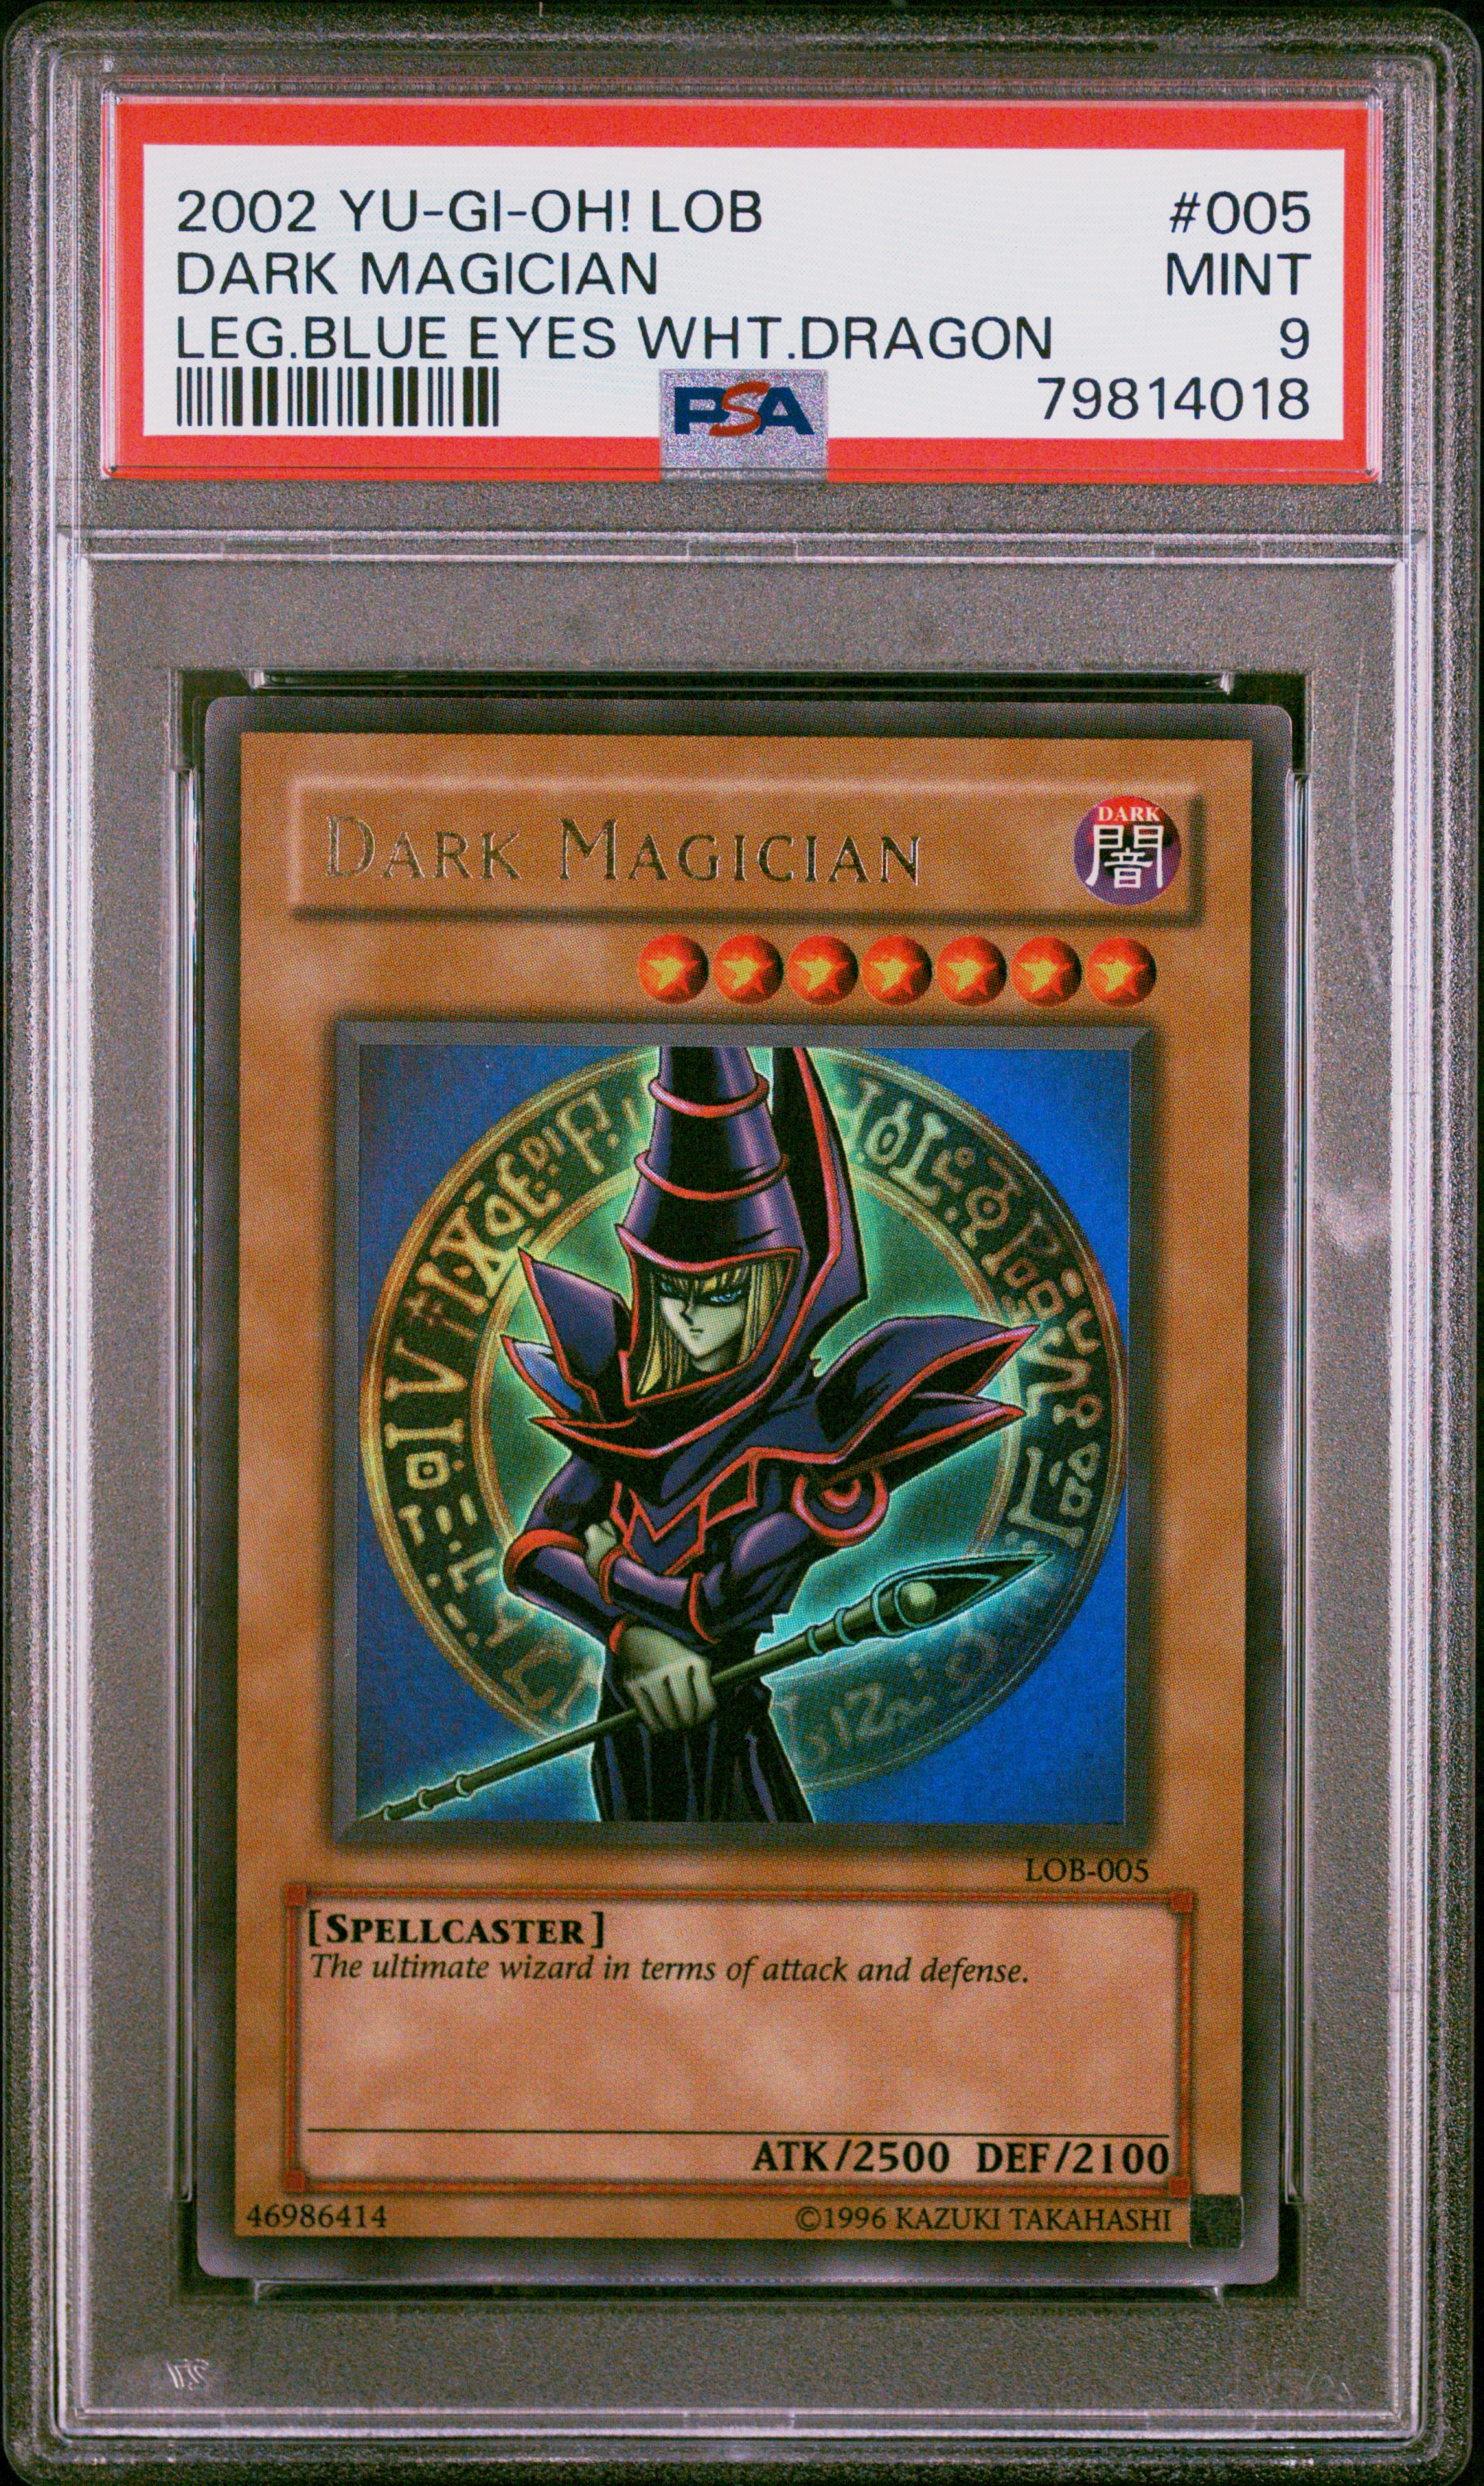 2002 Yu-Gi-Oh! LOB Legend Of Blue Eyes White Dragon #005 Dark Magician - PSA MINT 9